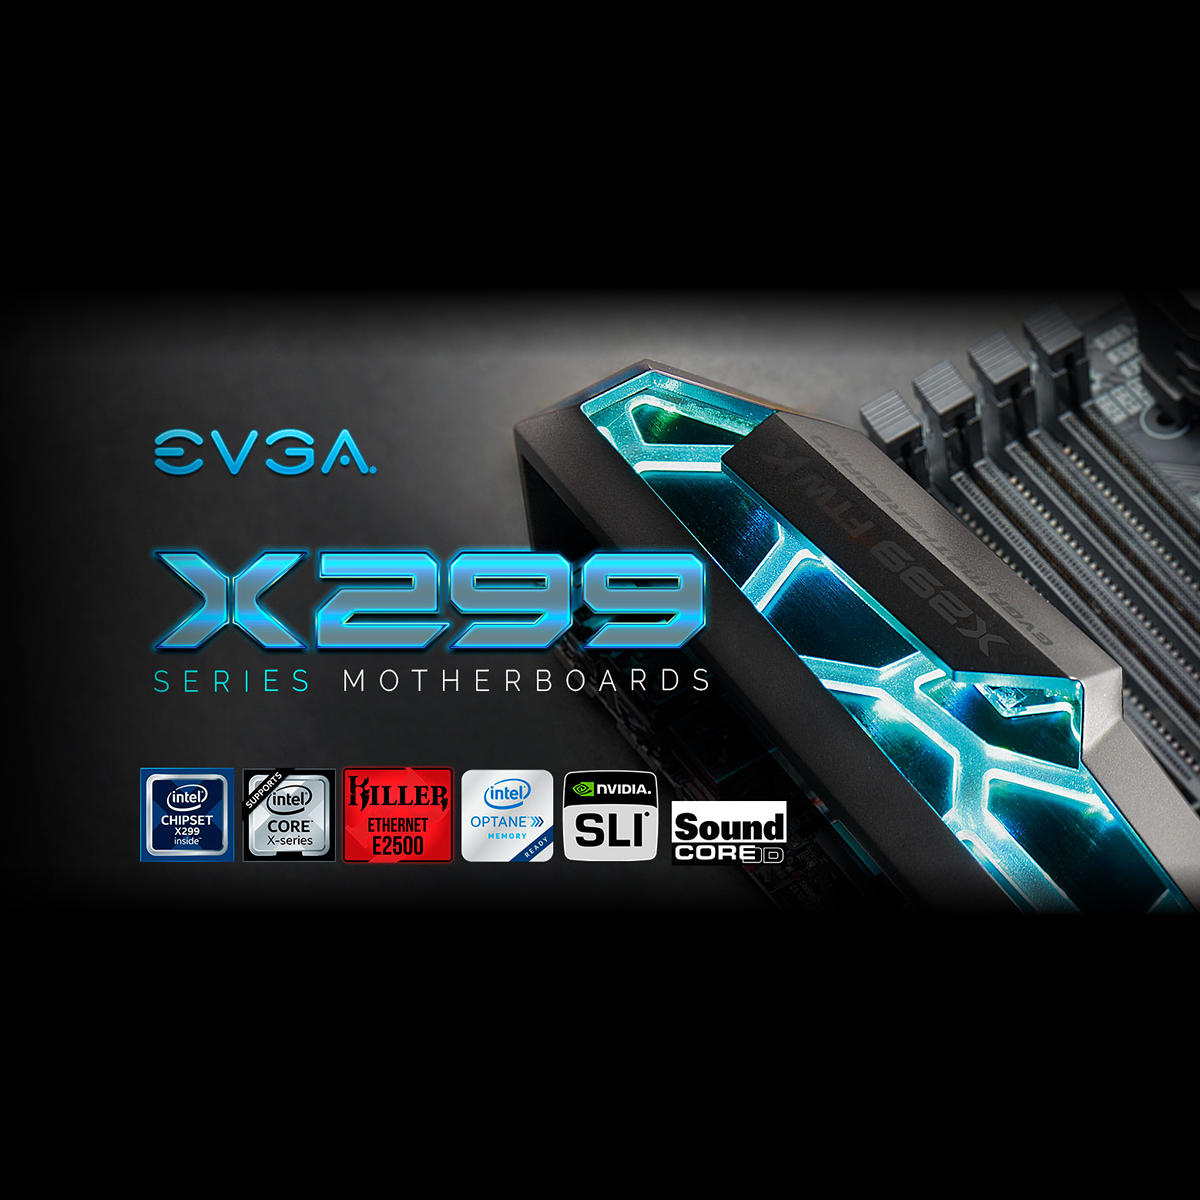 EVGA - Articles - EVGA X299 Series Motherboards